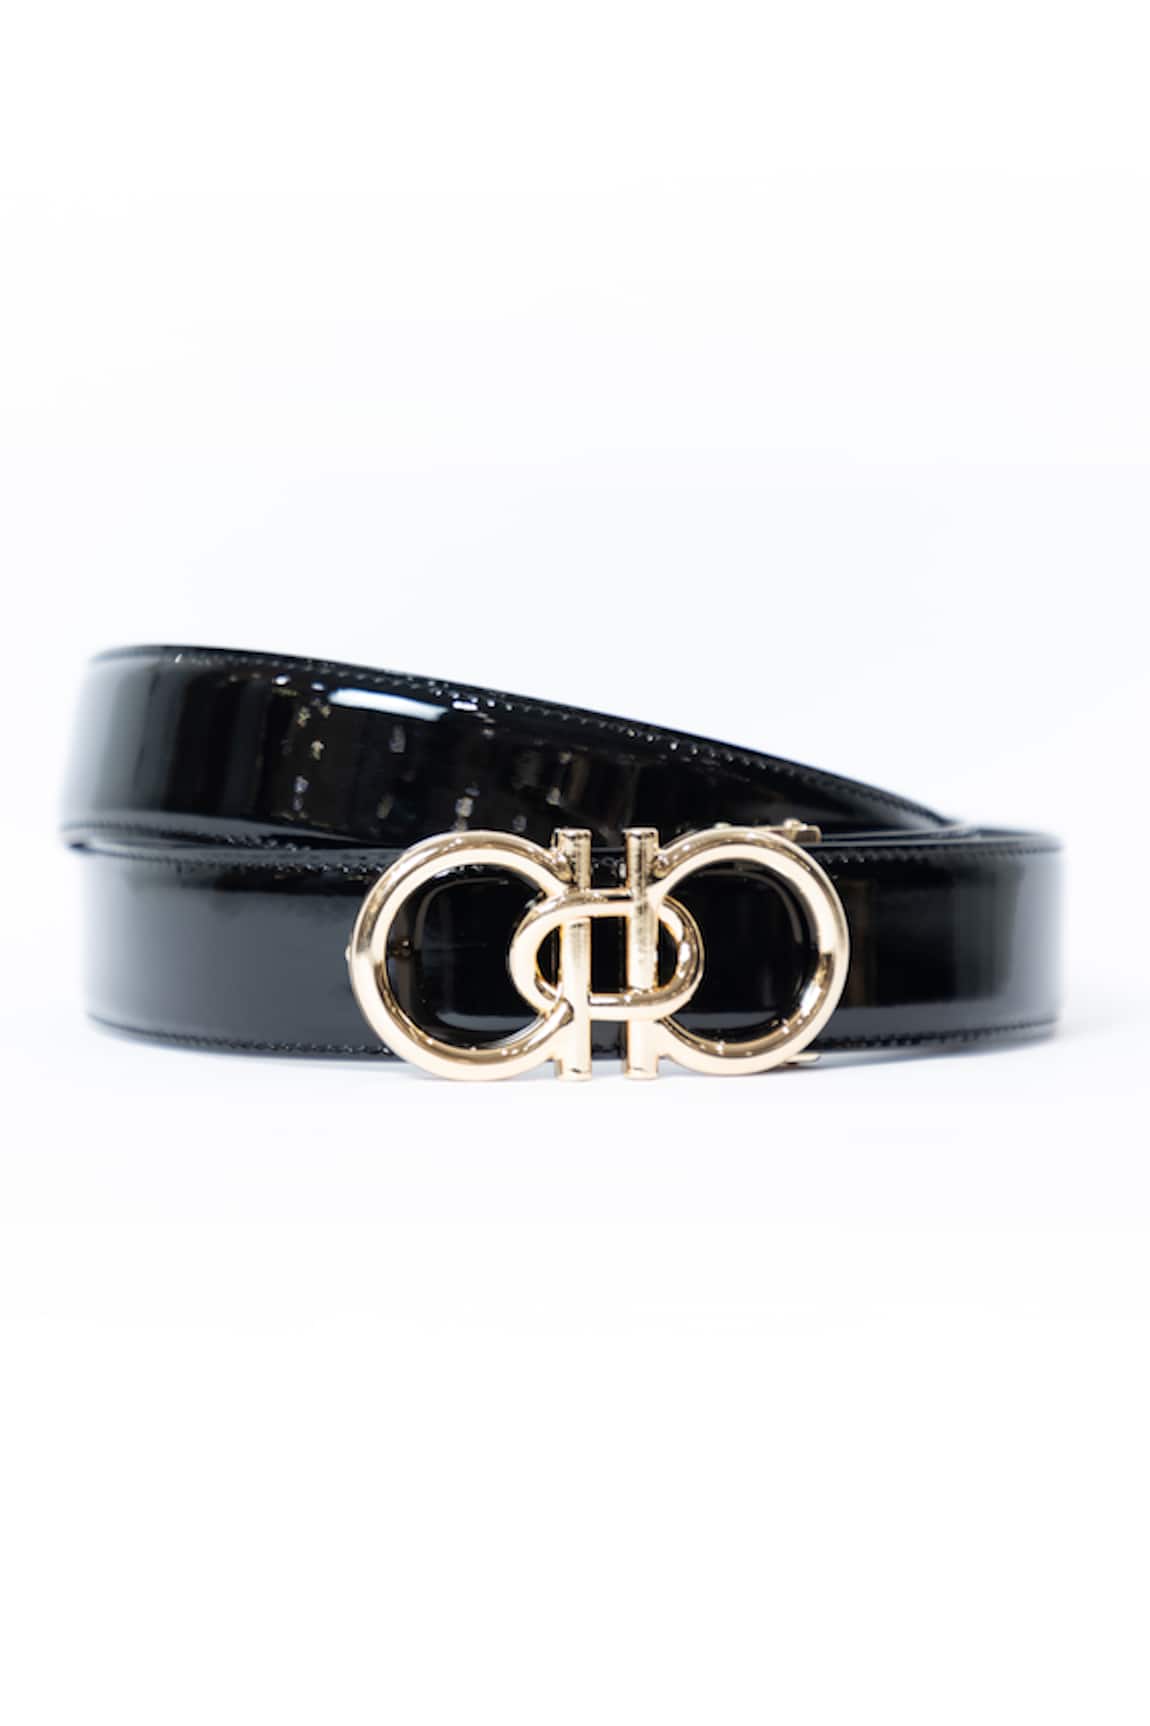 Vantier Patent Leather Infinity Buckled Belt